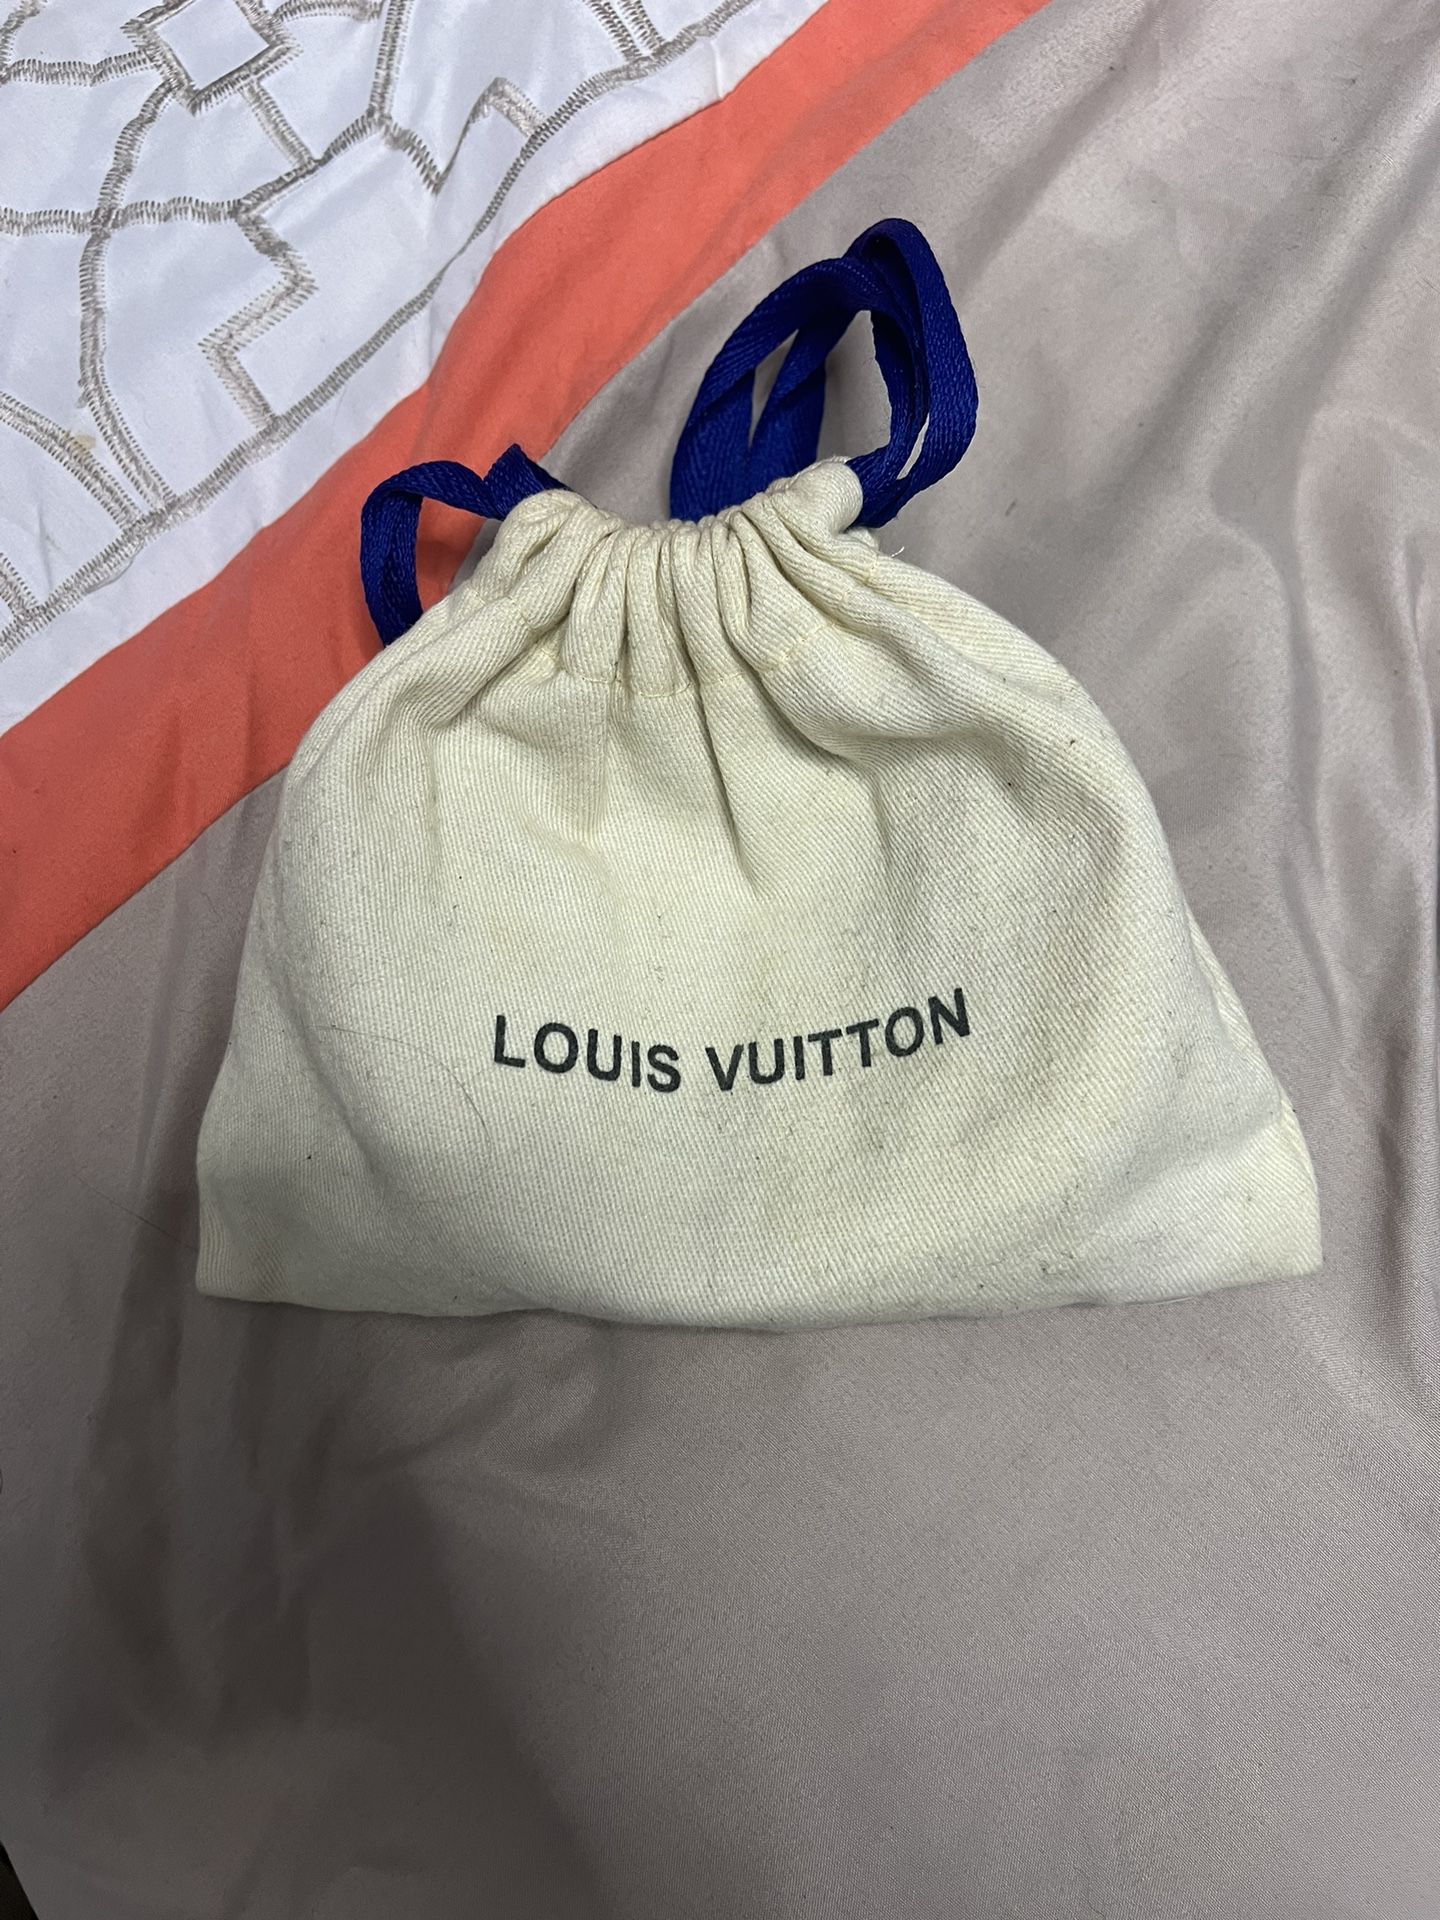 Louis Vuitton X Supreme Initiales Belt for Sale in Boca Raton, FL - OfferUp